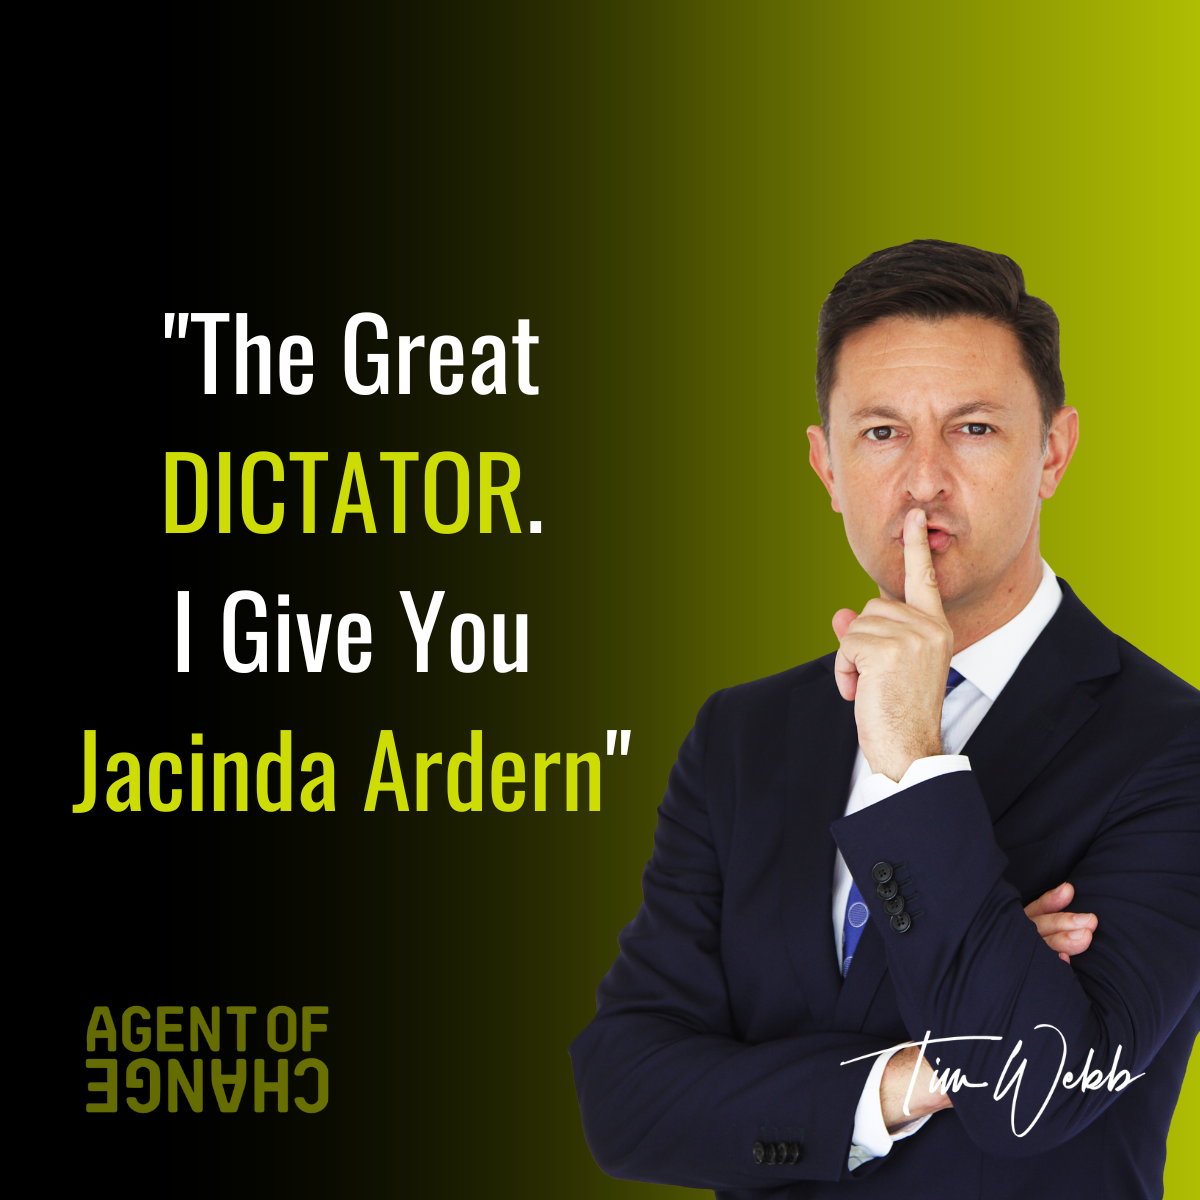 The Great DICTATOR - I Give You Jacinda Ardern